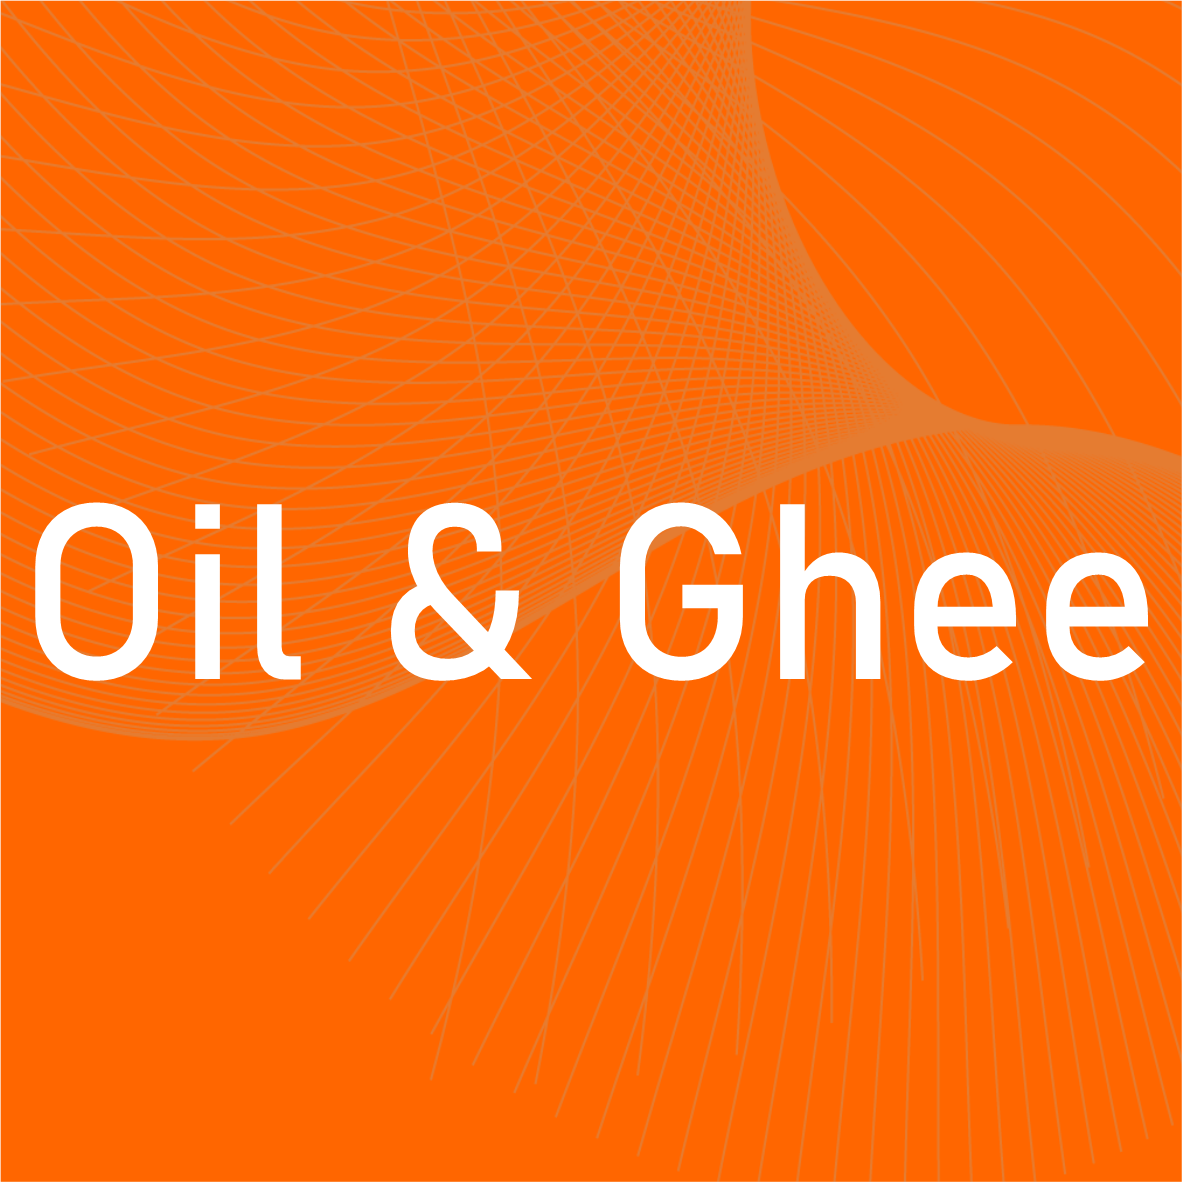 Oil & Ghee